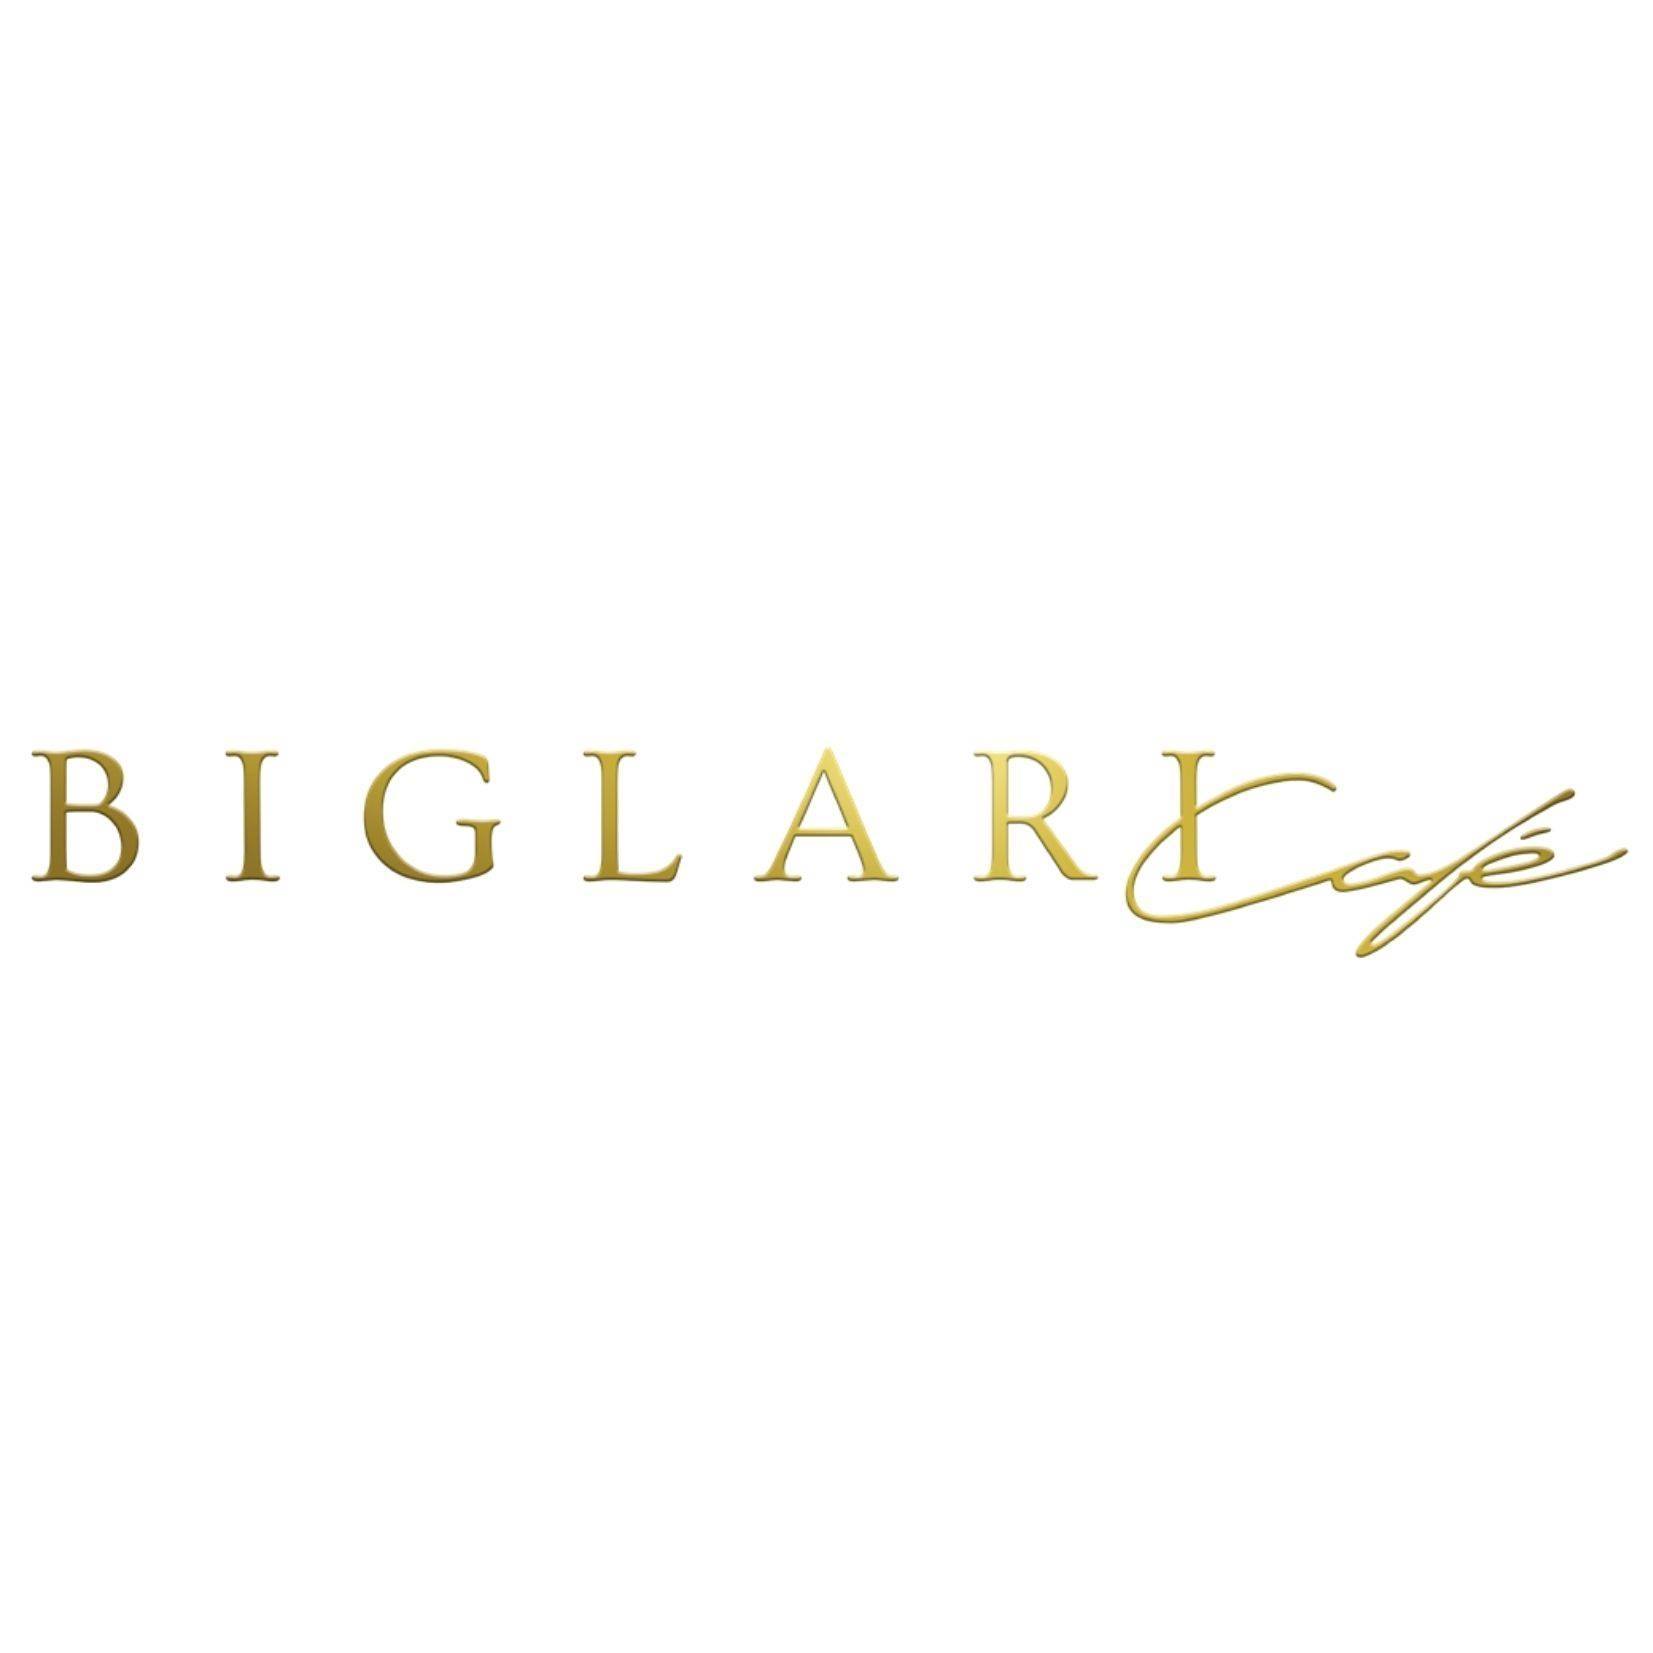  Logo Biglari café